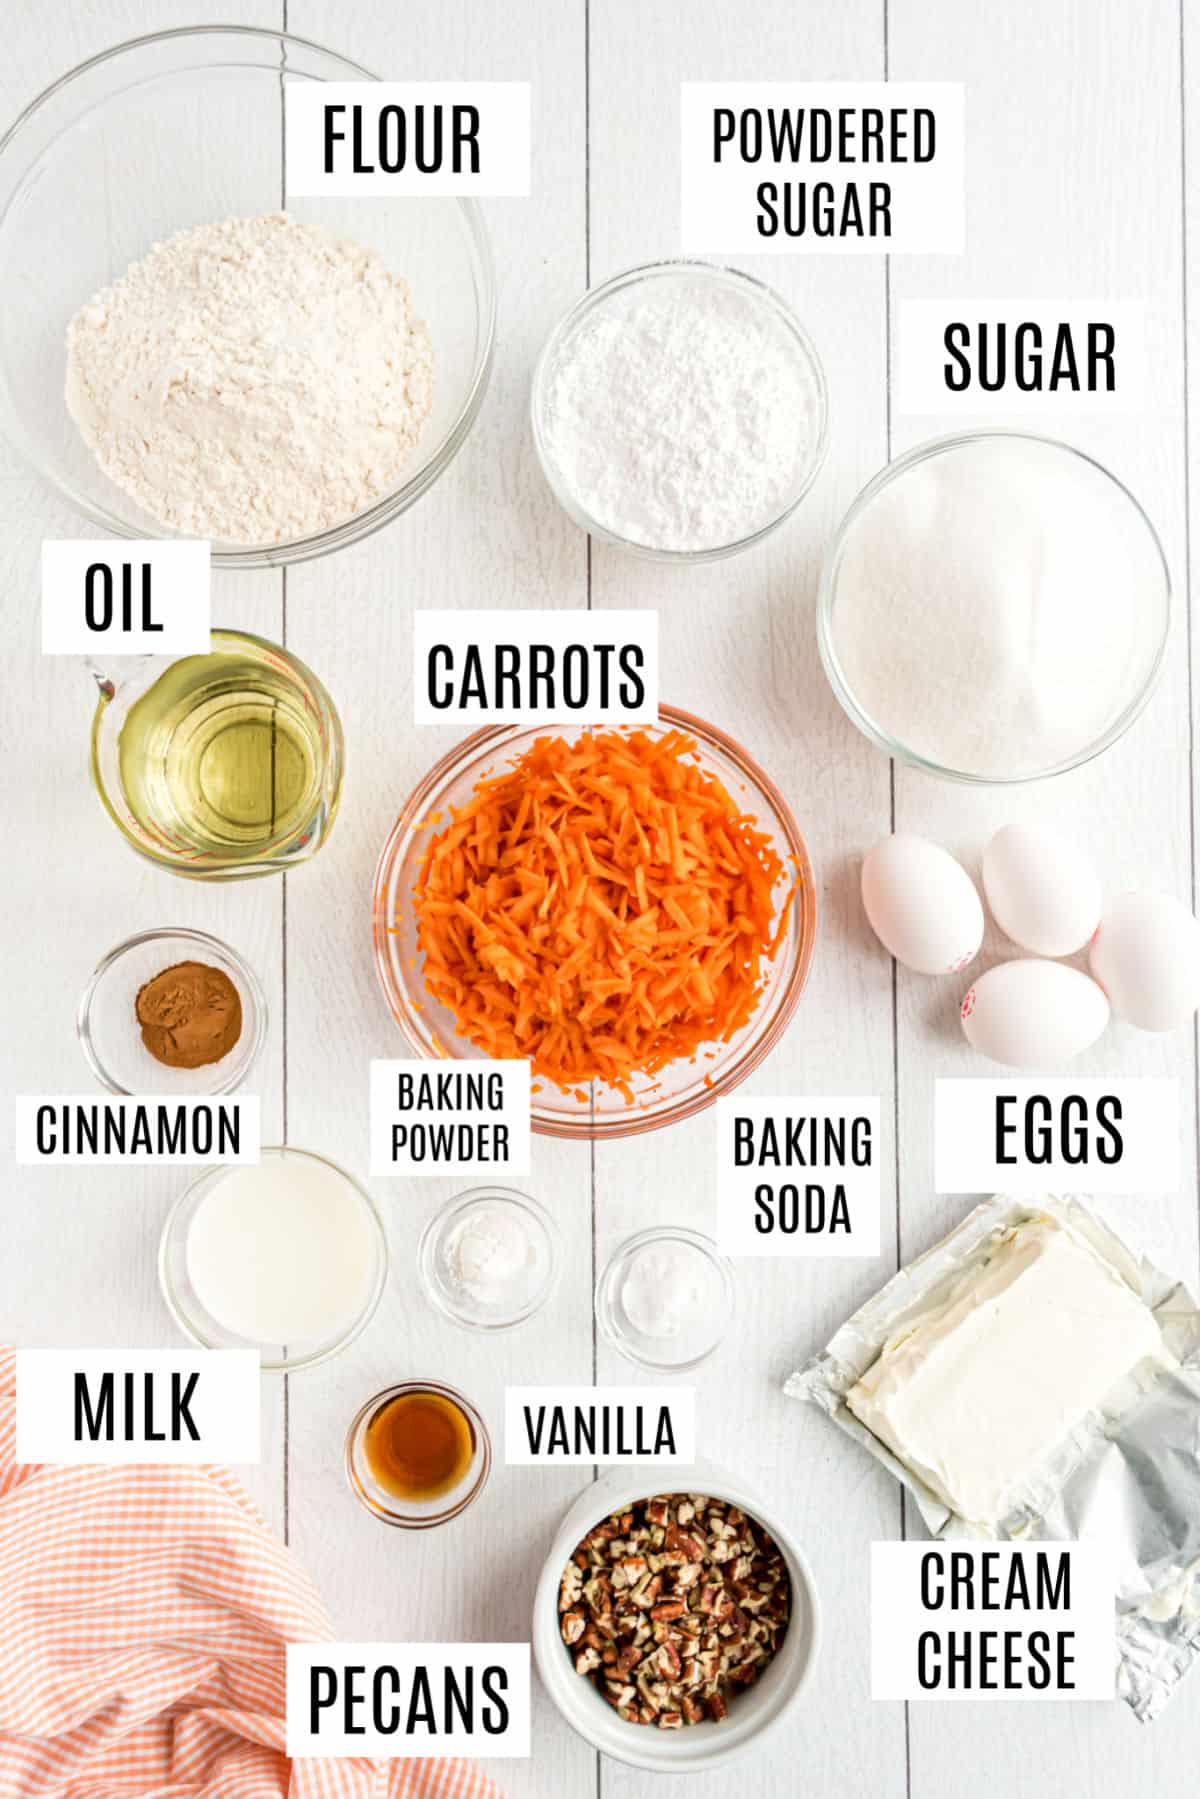 Ingredients needed for homemade carrot bundt cake recipe.